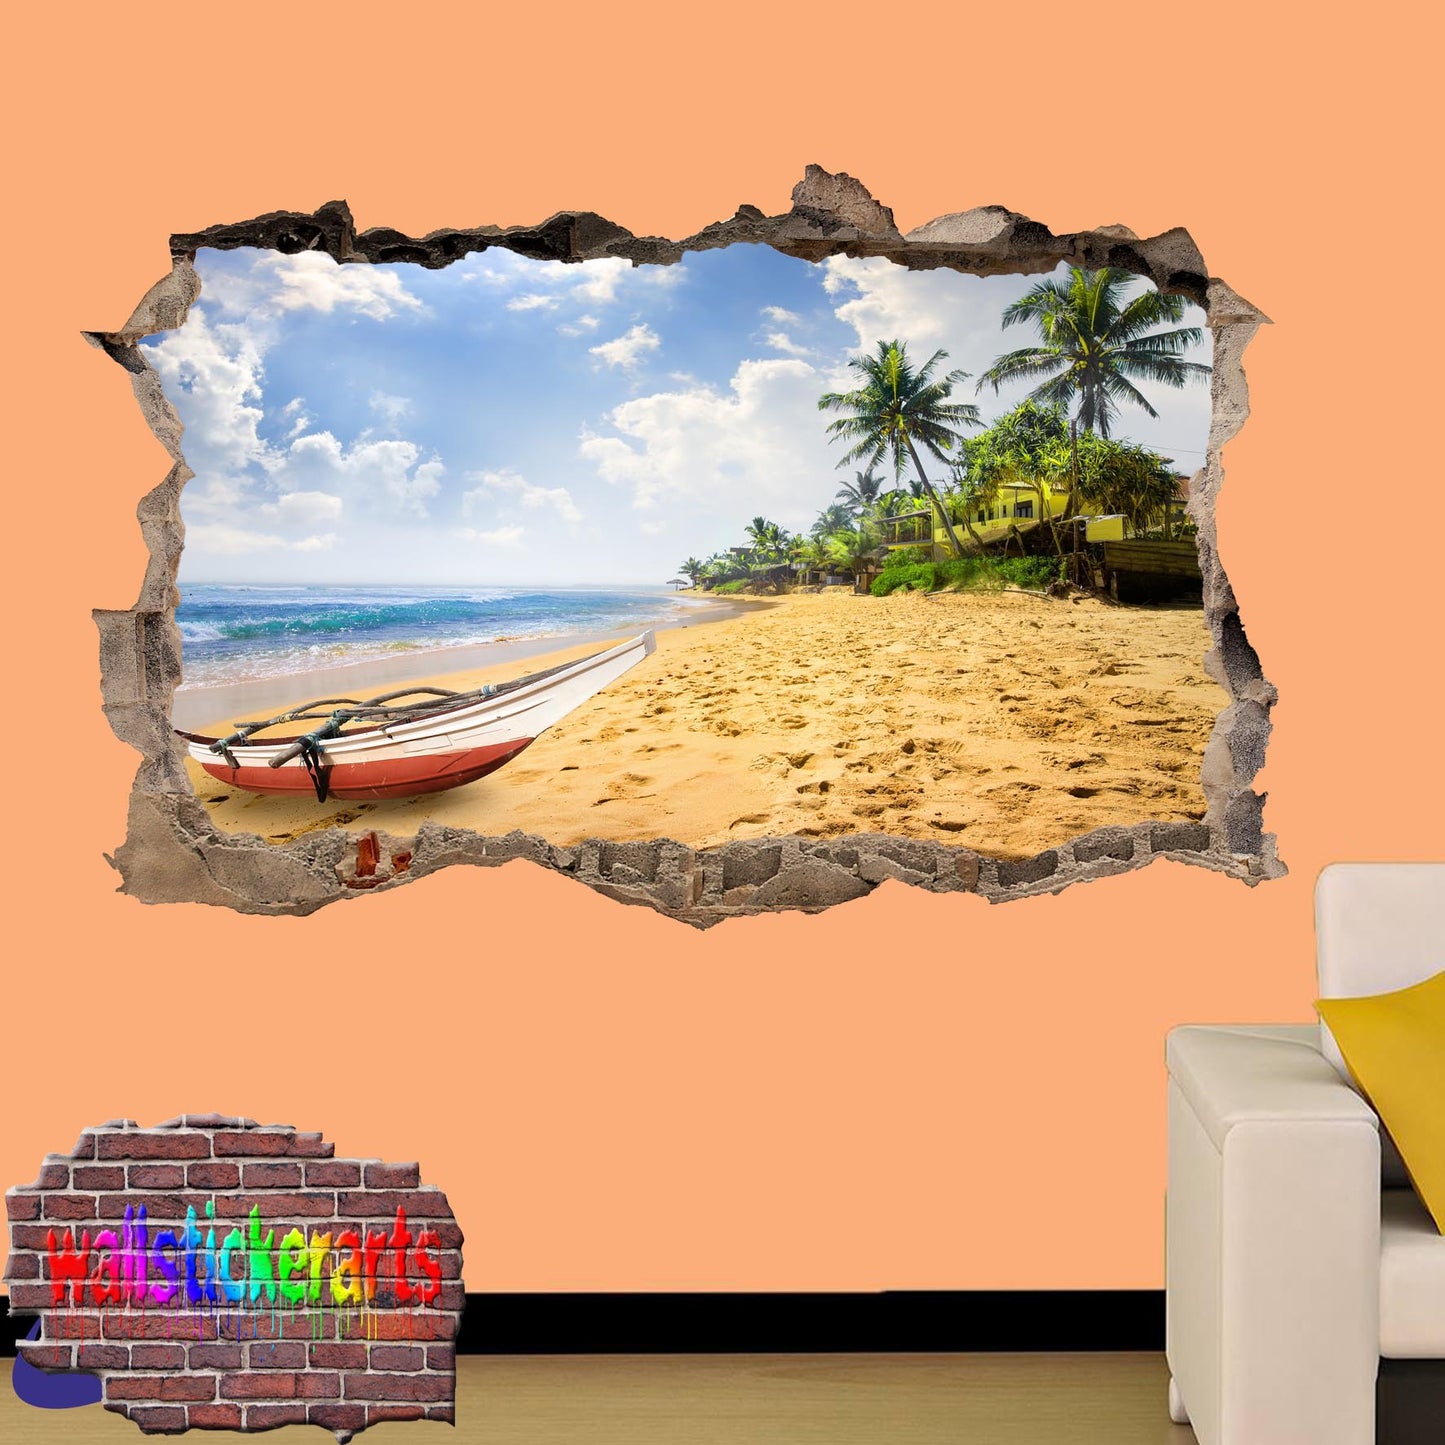 Tropical Beach Sun Sand Boat 3d Art Wall Sticker Mural Room Office Shop Decoration Decal YI8